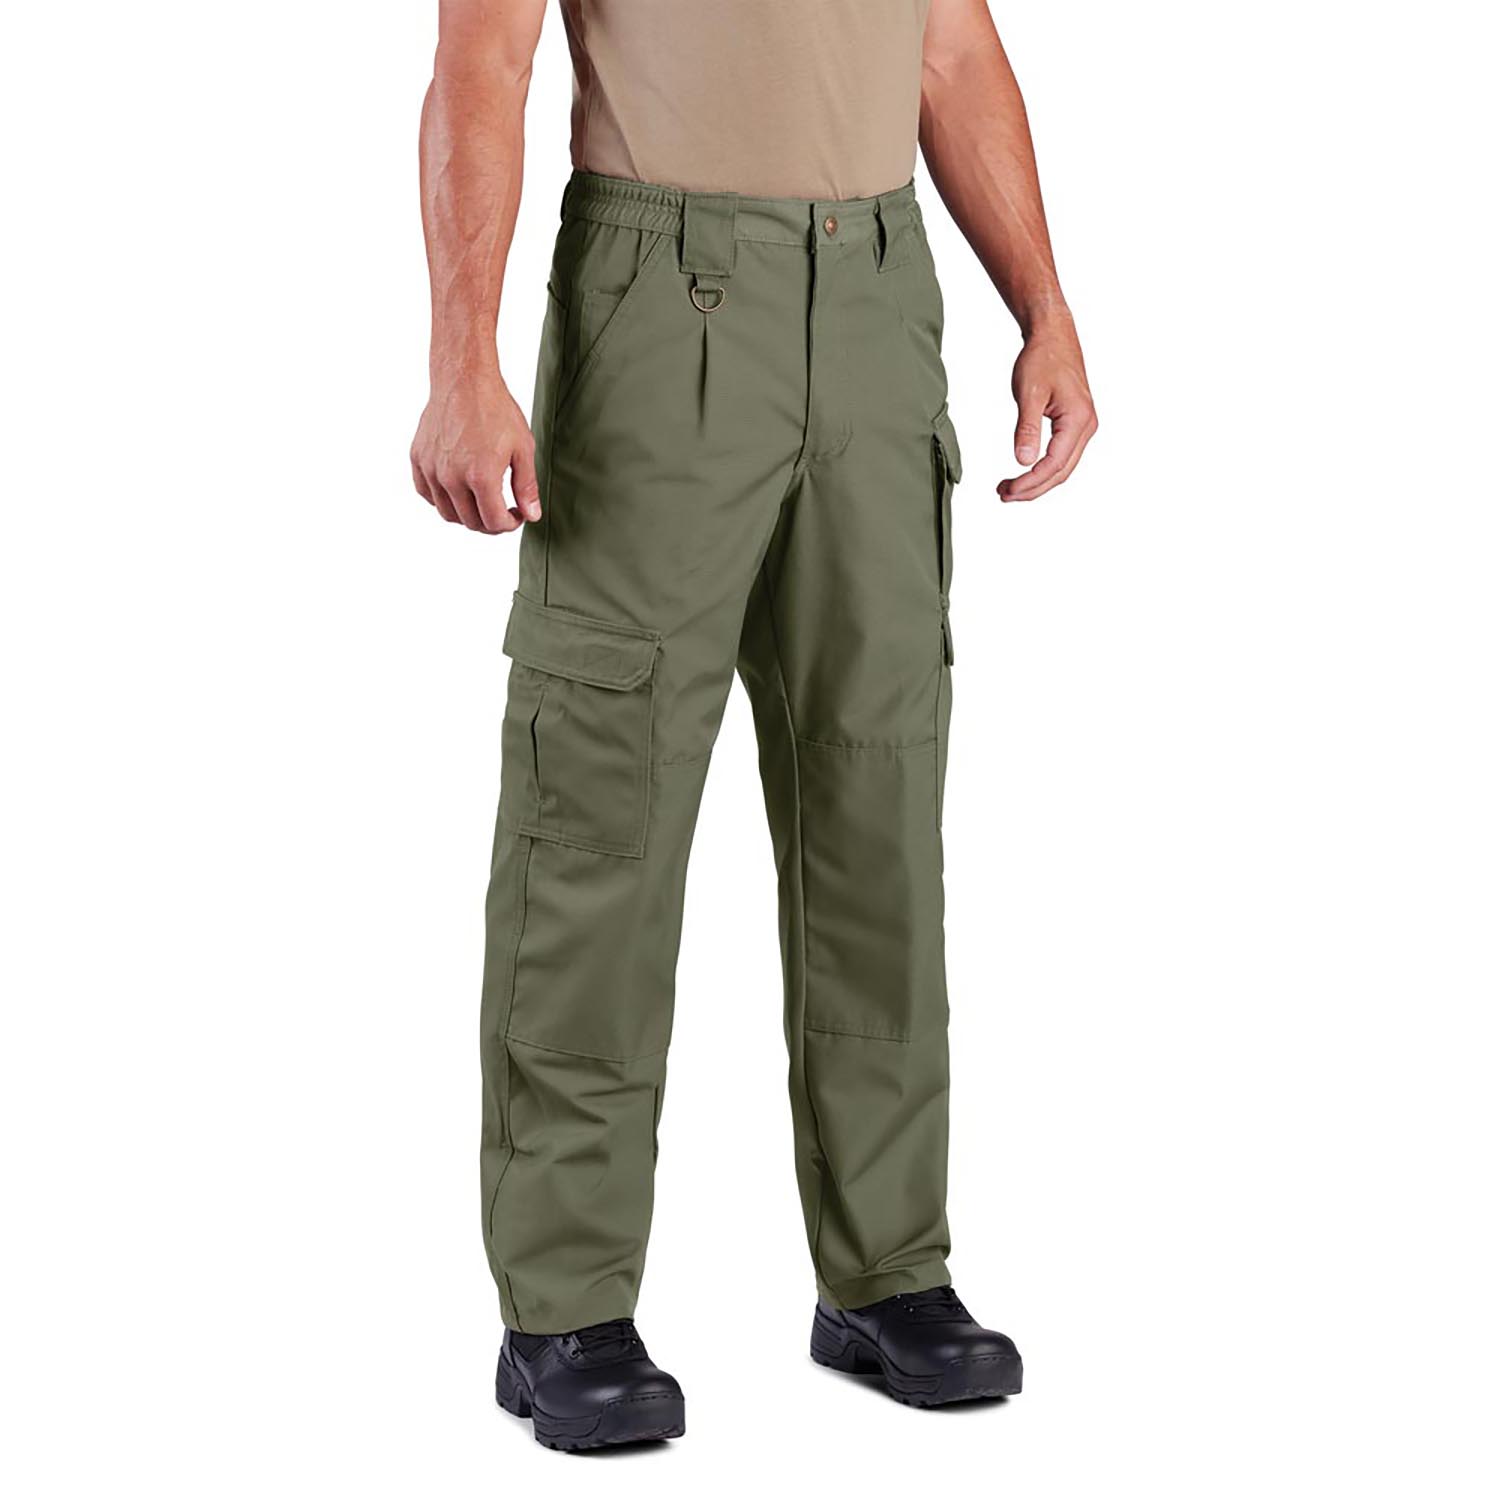 Propper Men's Lightweight Tactical Pant